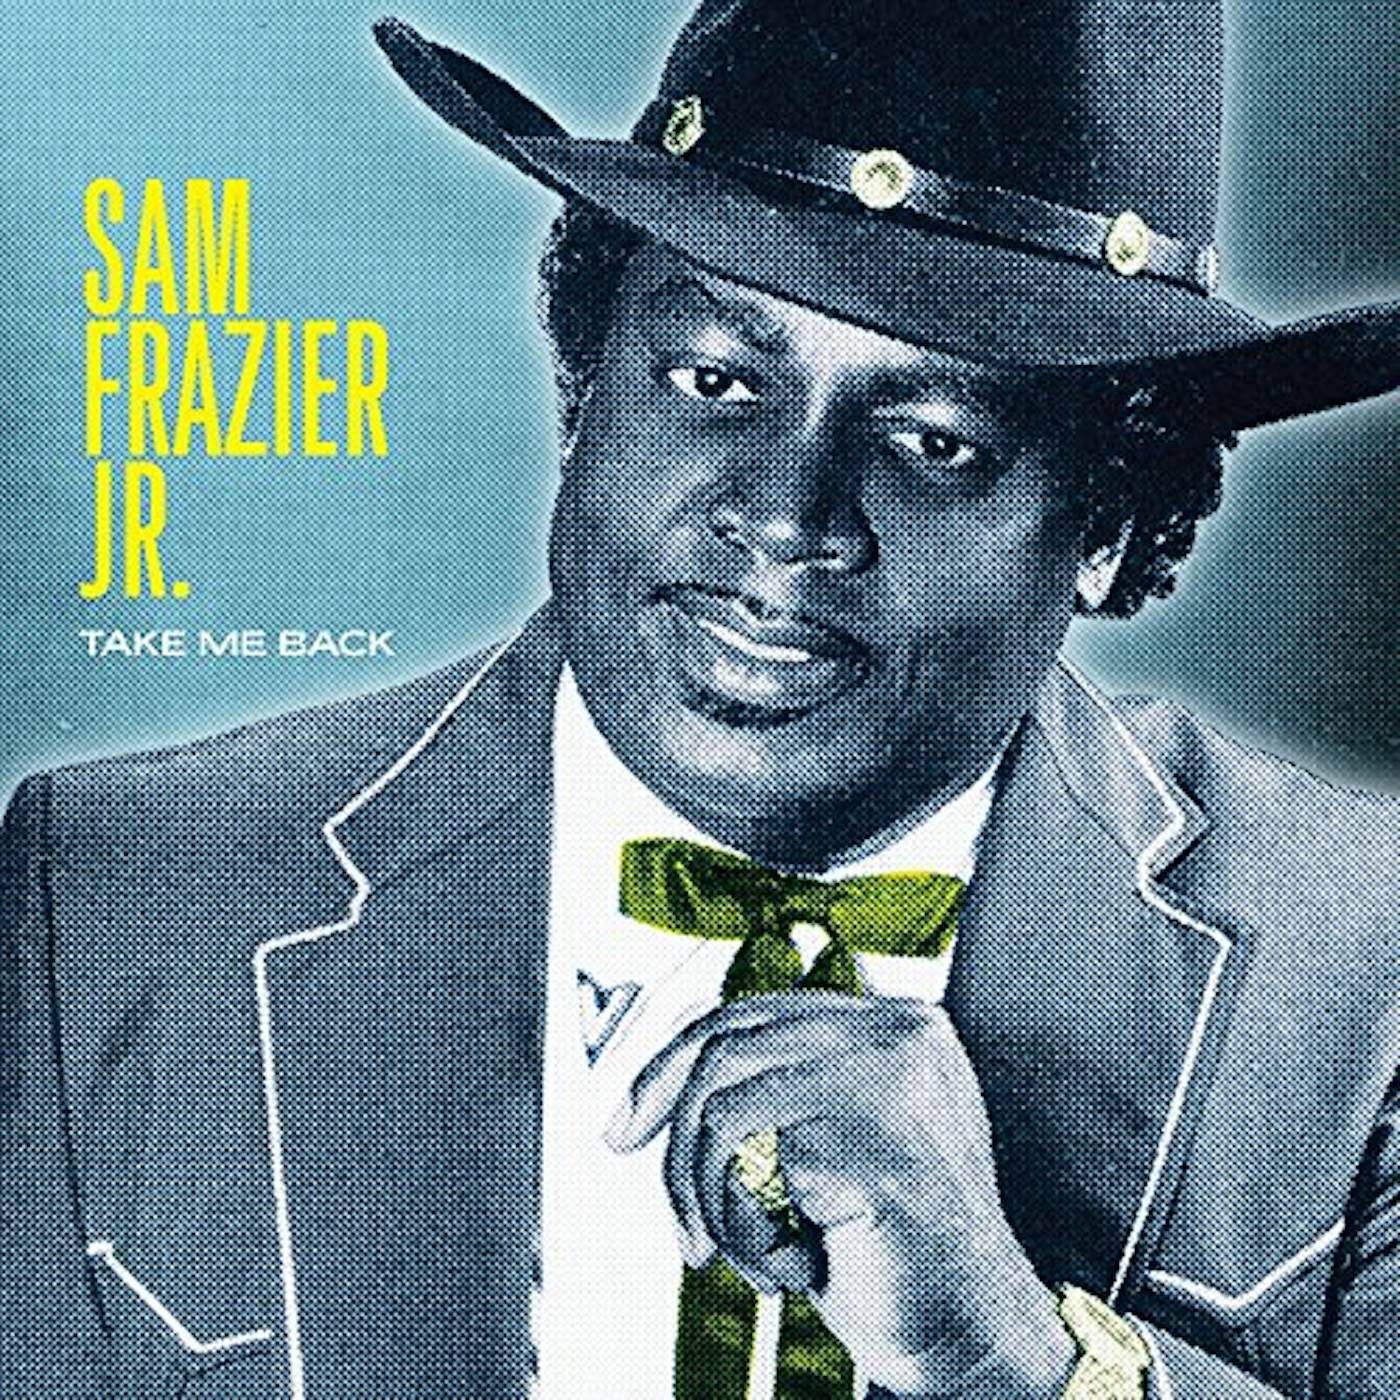 Sam Frazier, Jr. TAKE ME BACK CD